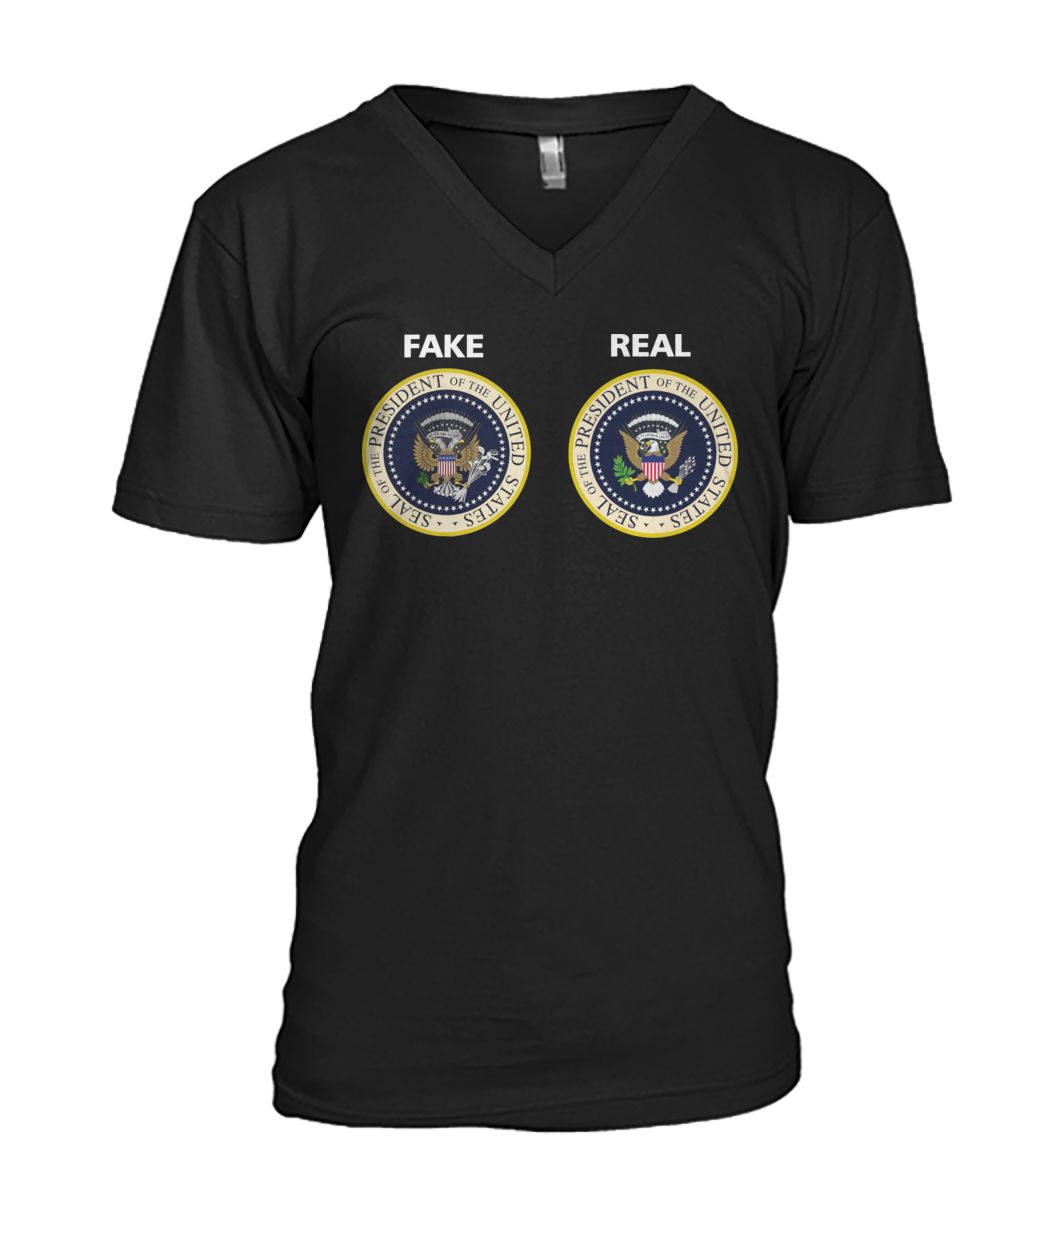 Real and fake presidential seal men's v-neck